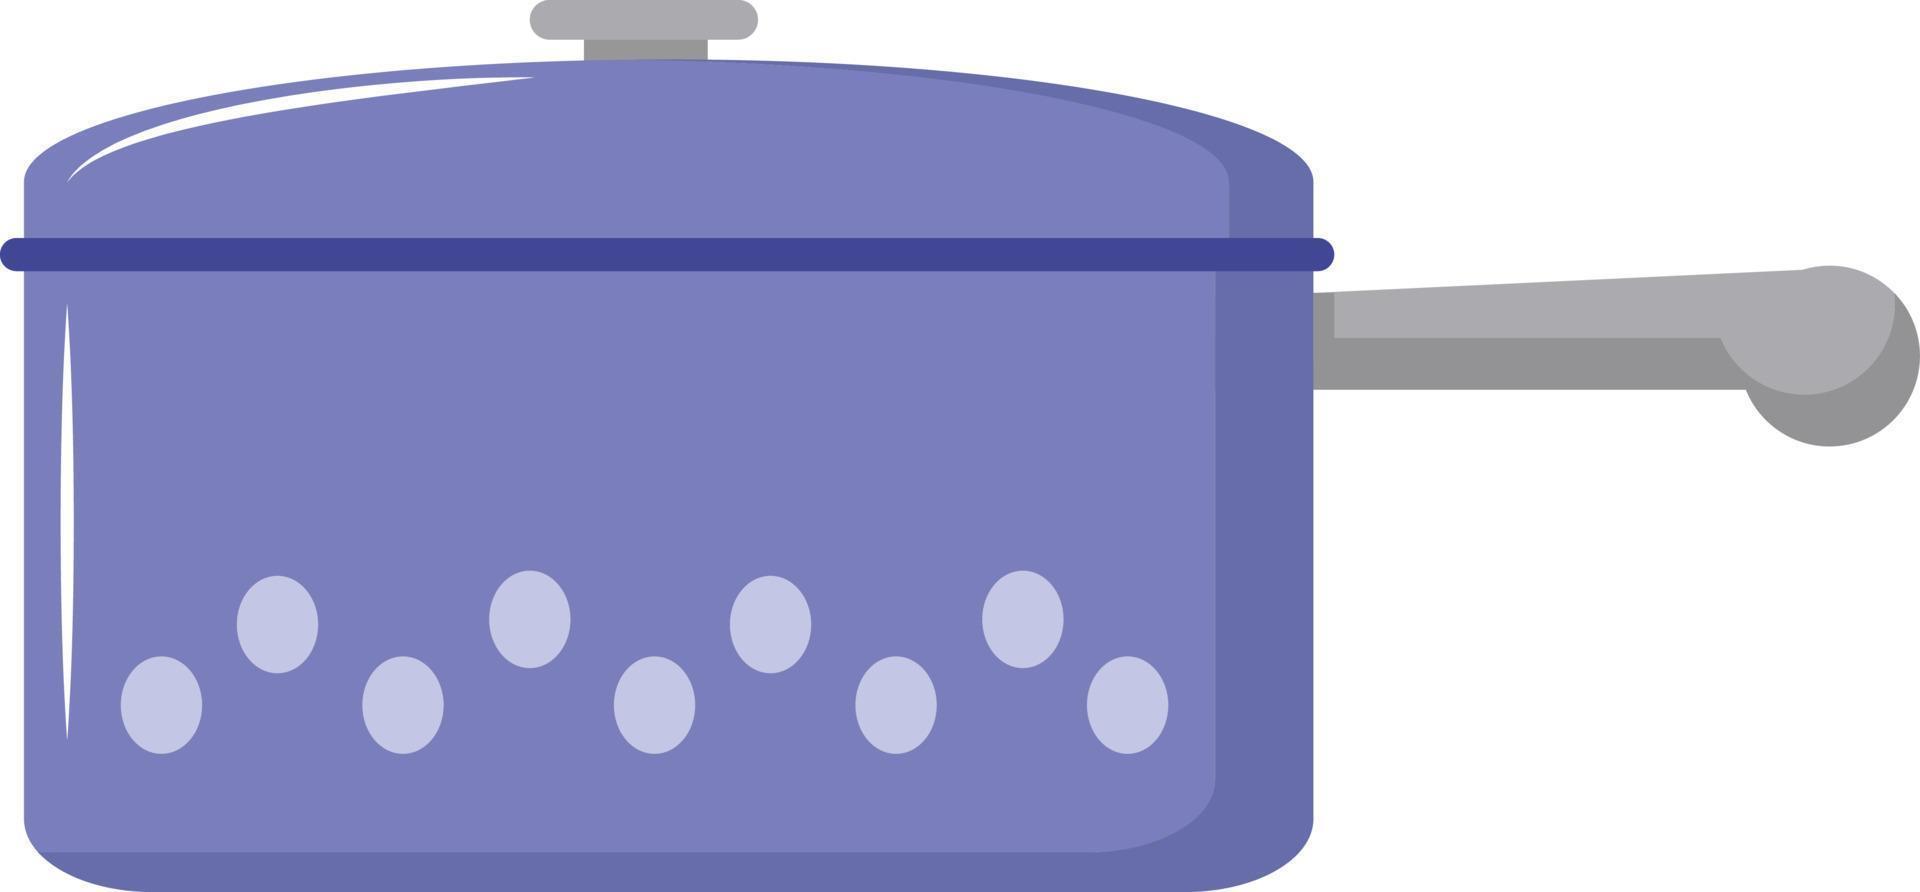 Purple pan, illustration, vector on white background.